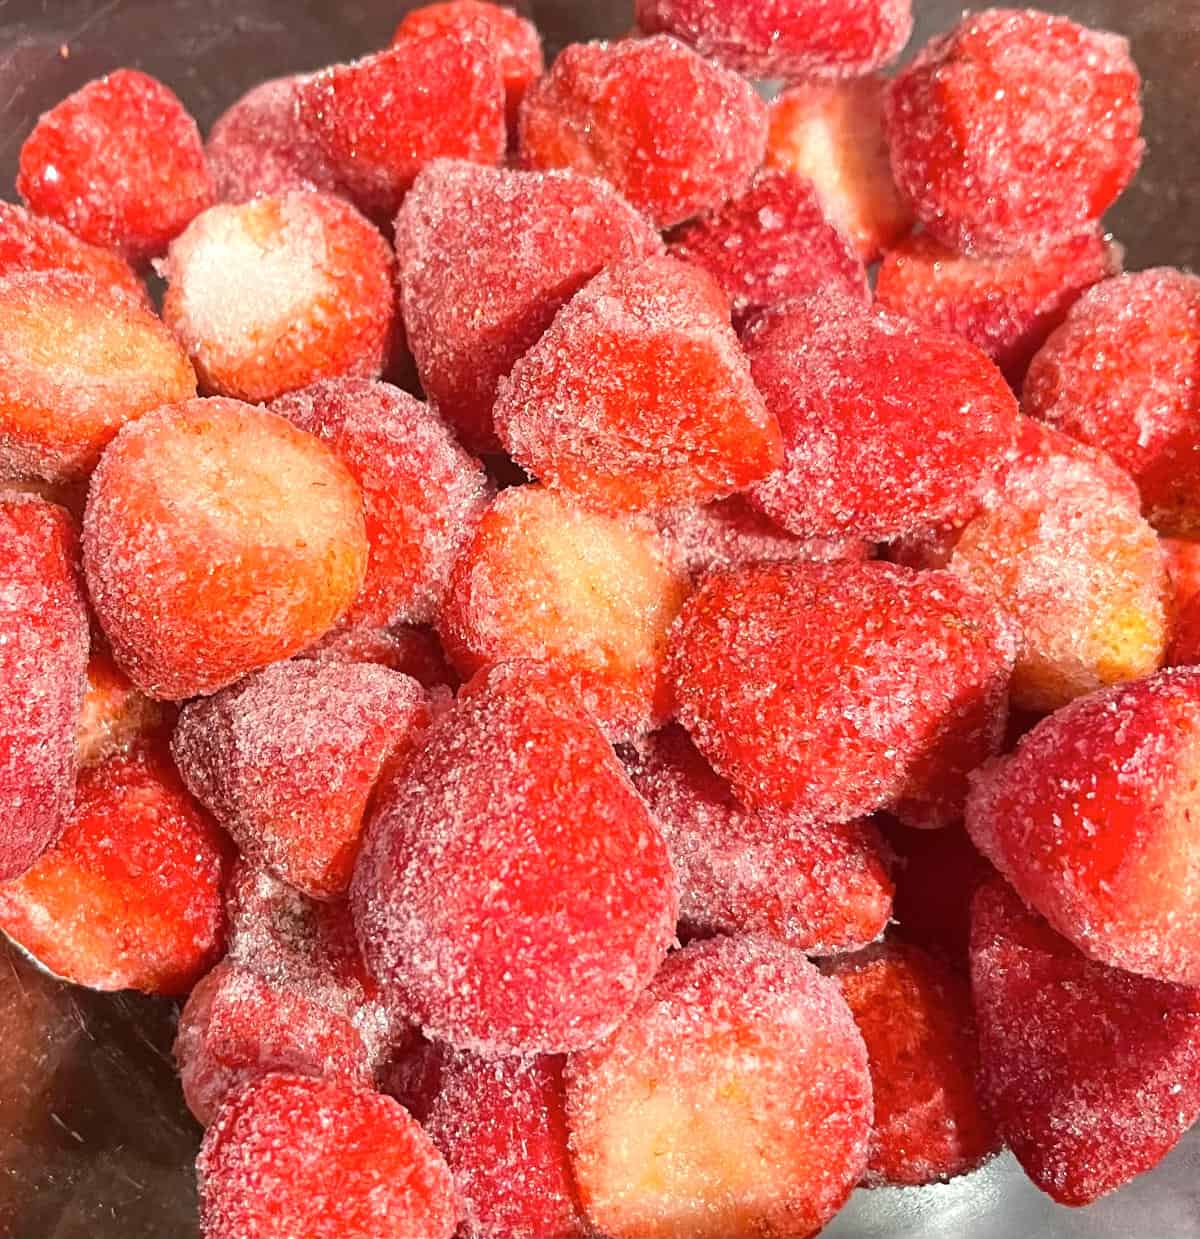 Frozen strawberries.